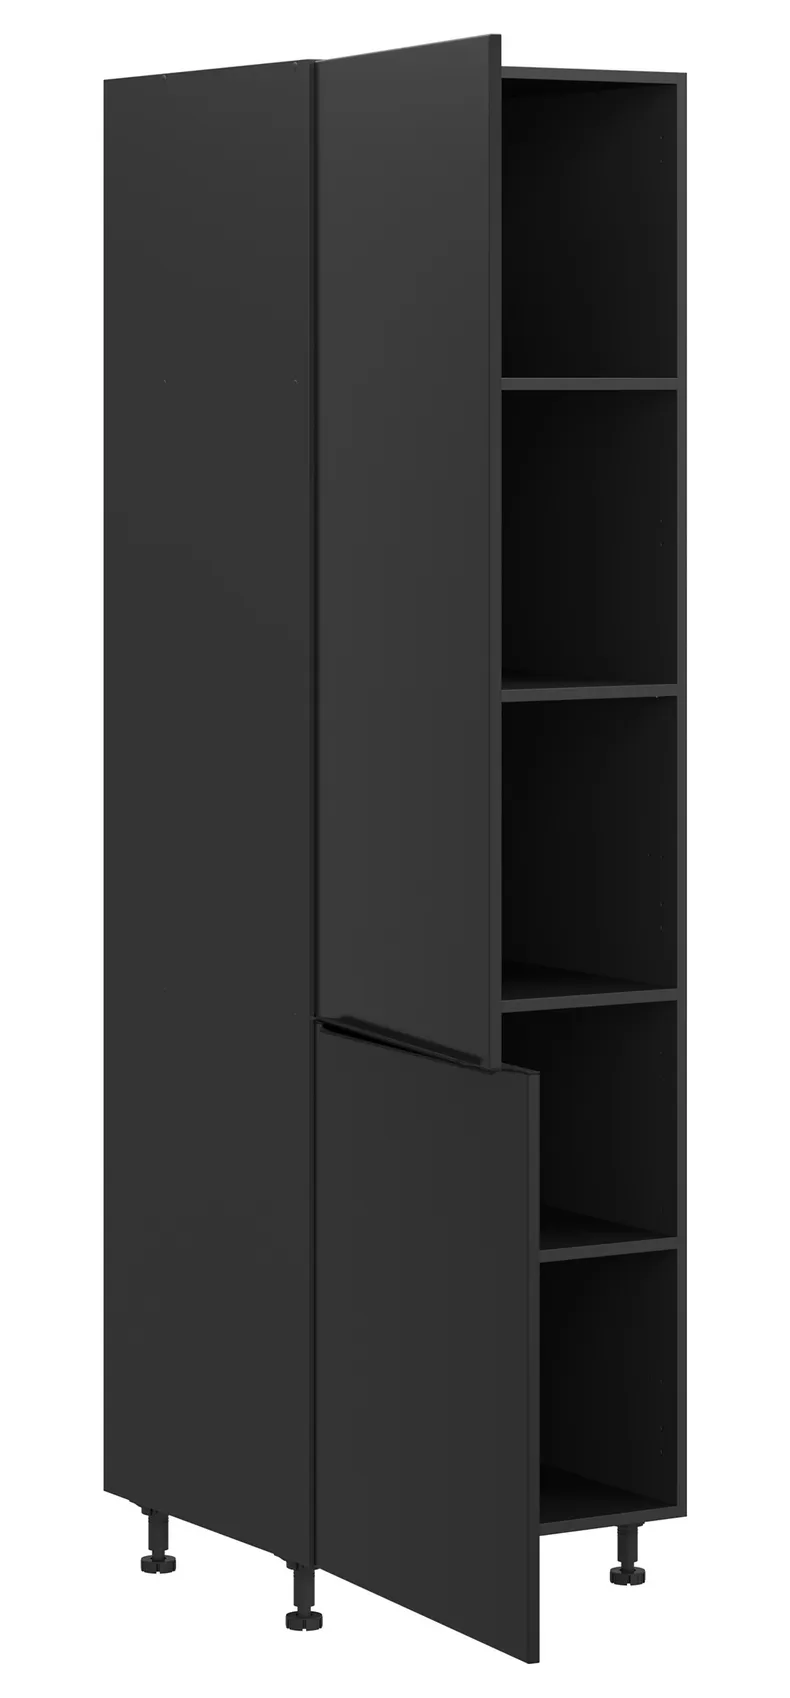 BRW Підошва L6 висотою 60 см ліва кухонна шафа чорна матова, чорний/чорний матовий FM_D_60/207_L/L-CA/CAM фото №3